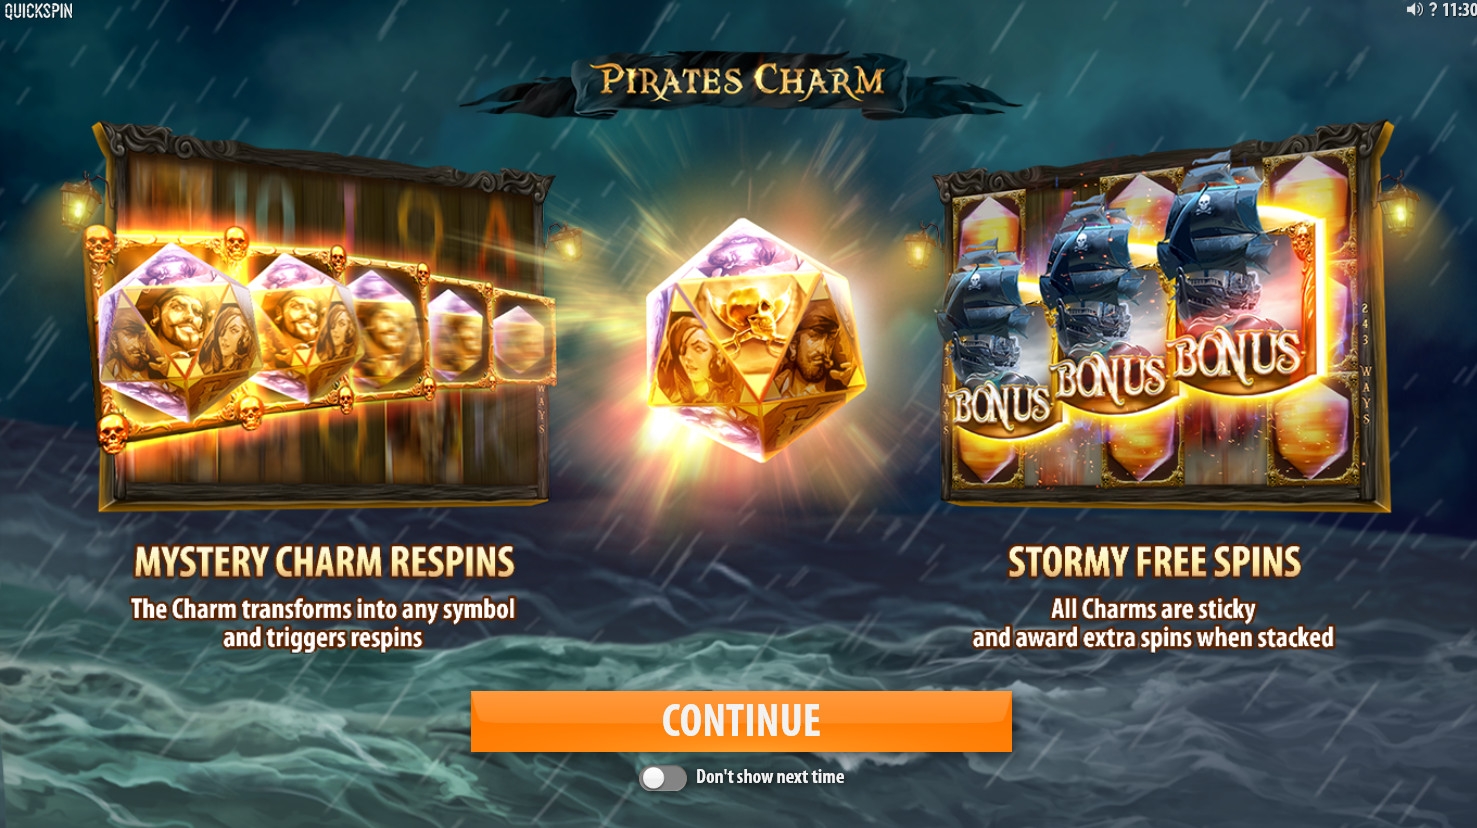 Pirates Charm slot